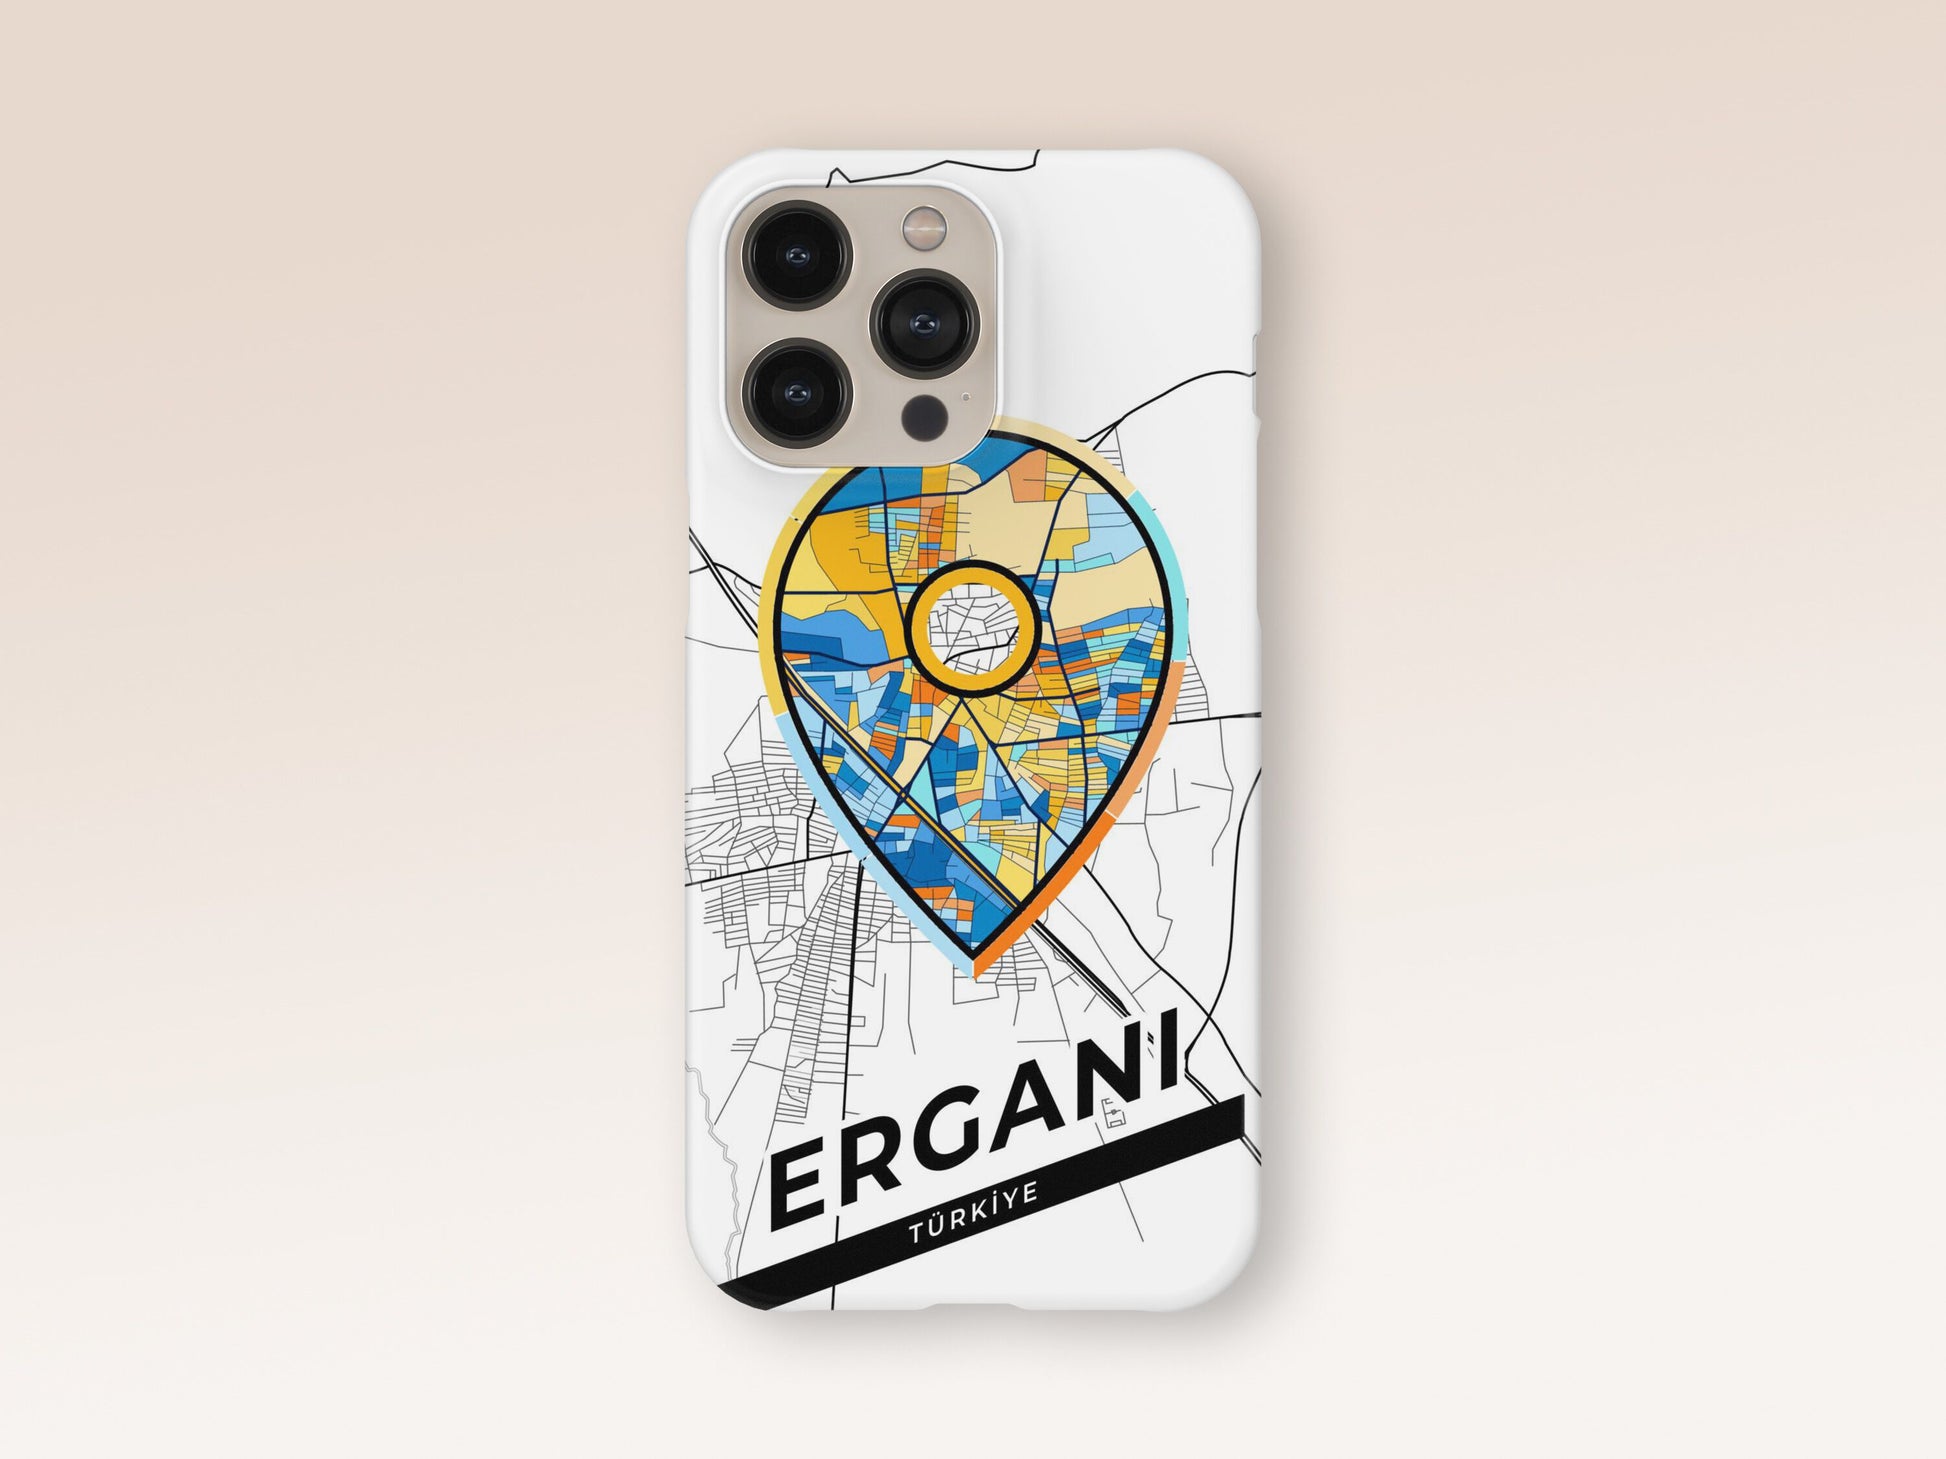 Ergani Turkey slim phone case with colorful icon. Birthday, wedding or housewarming gift. Couple match cases. 1